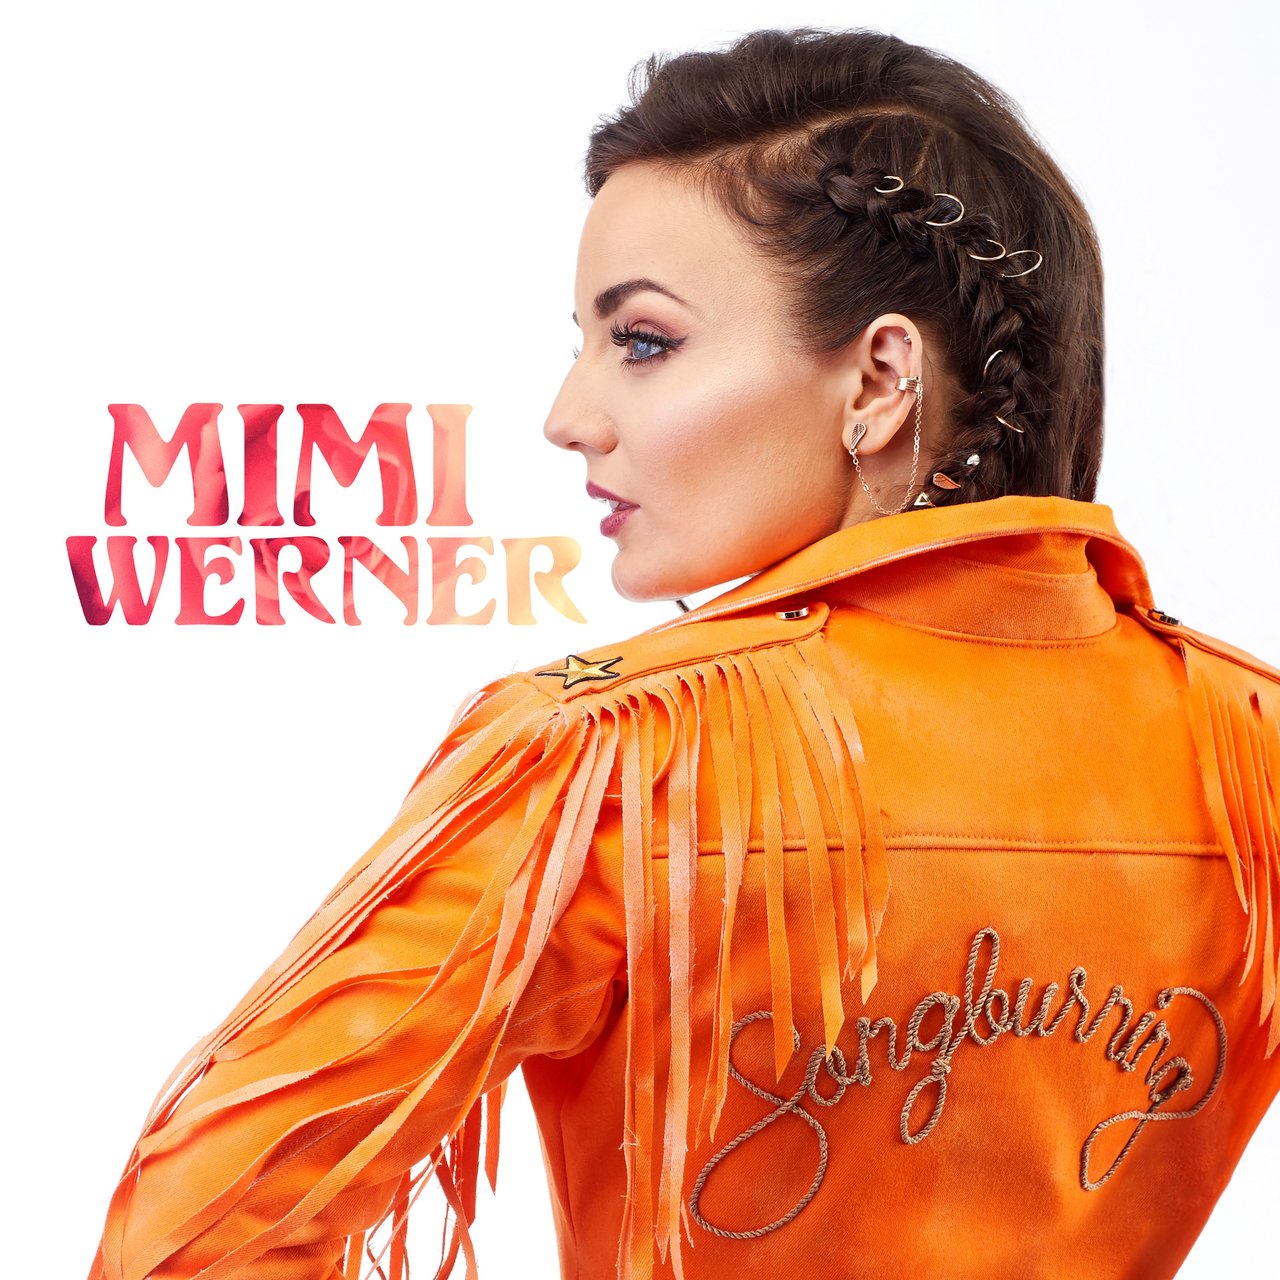 Mimi Werner Songburning cover artwork